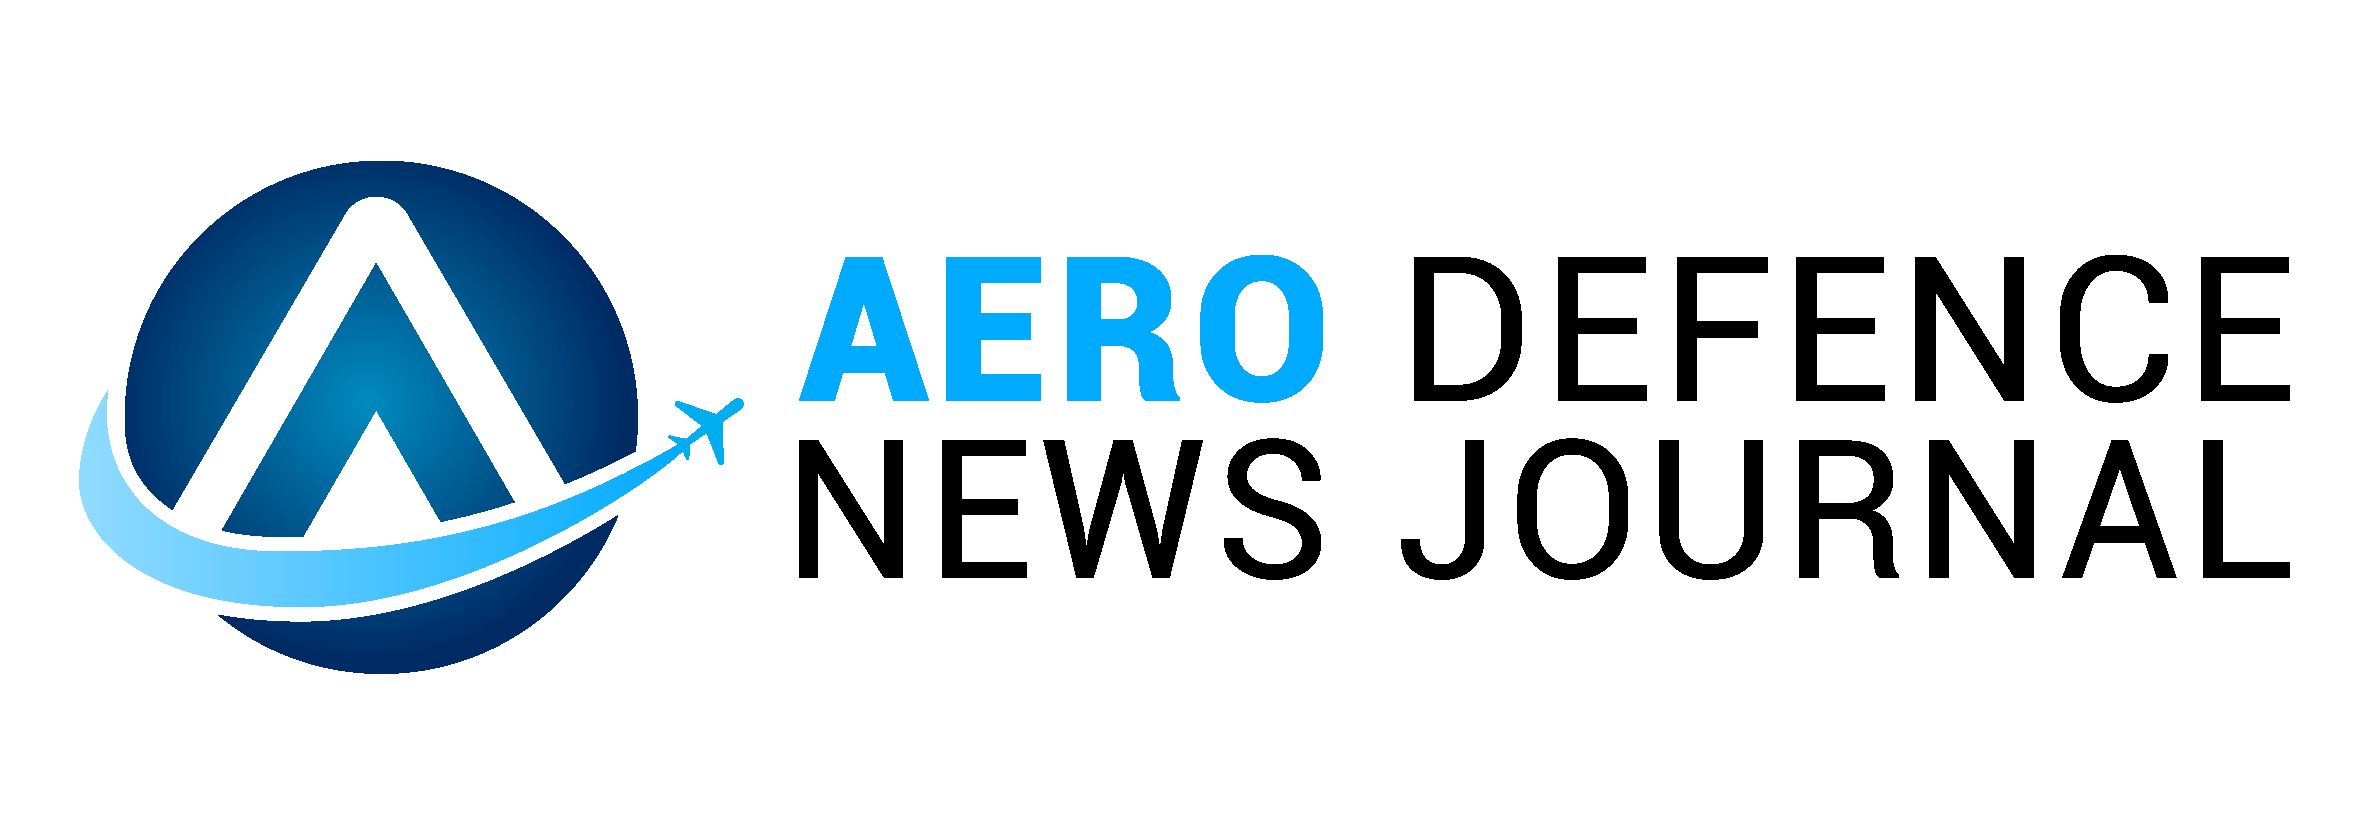 Aero Defence News Journal